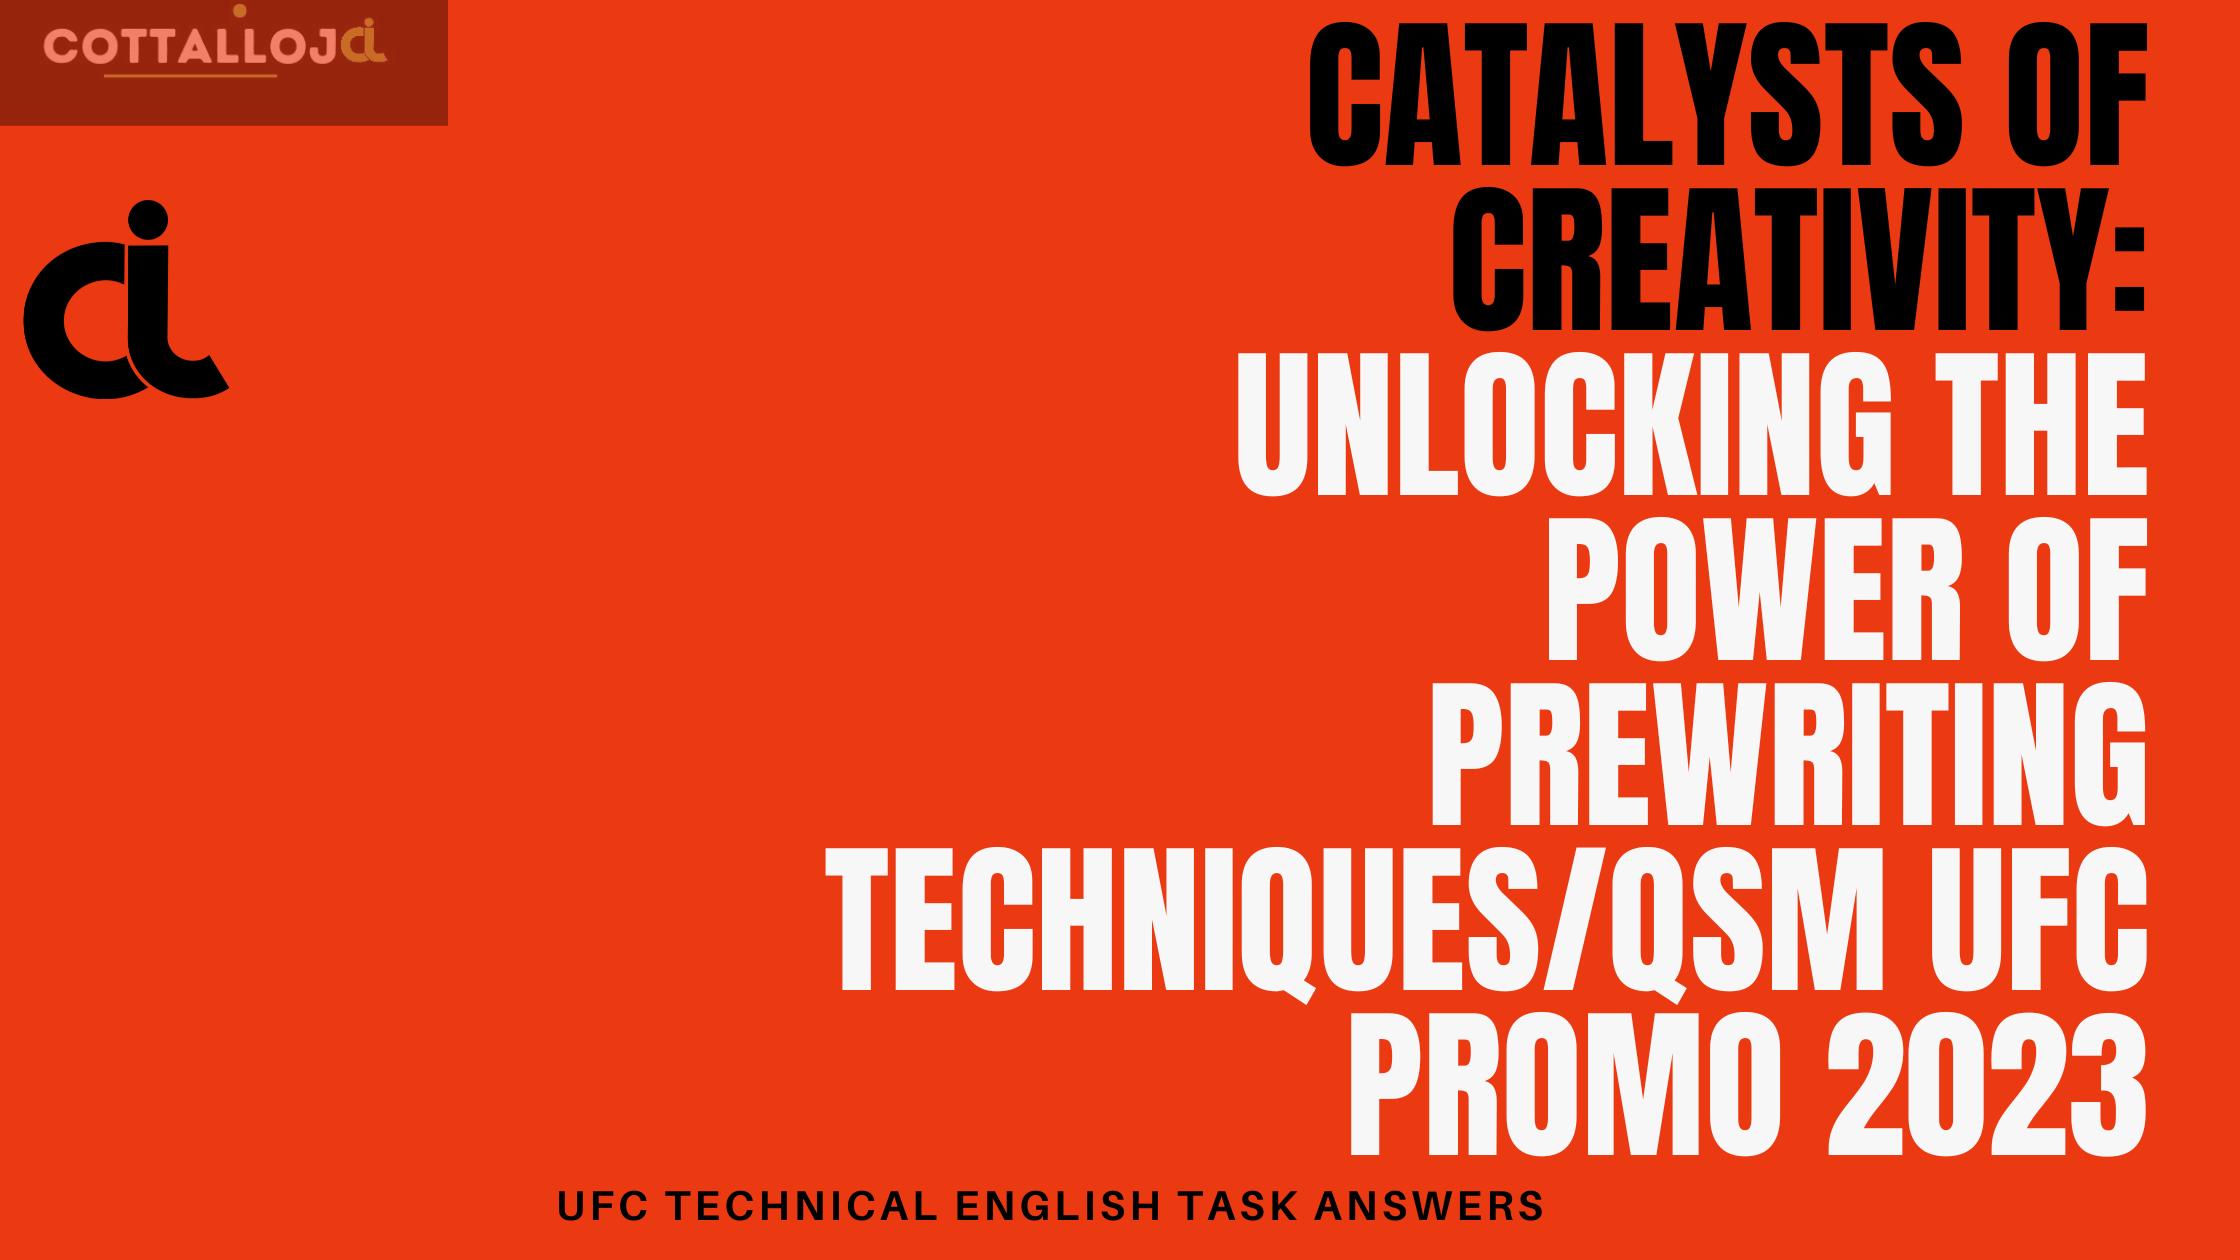 Catalysts of Creativity: Unlocking the Power of Prewriting Techniques/QSM UFC promo 2023